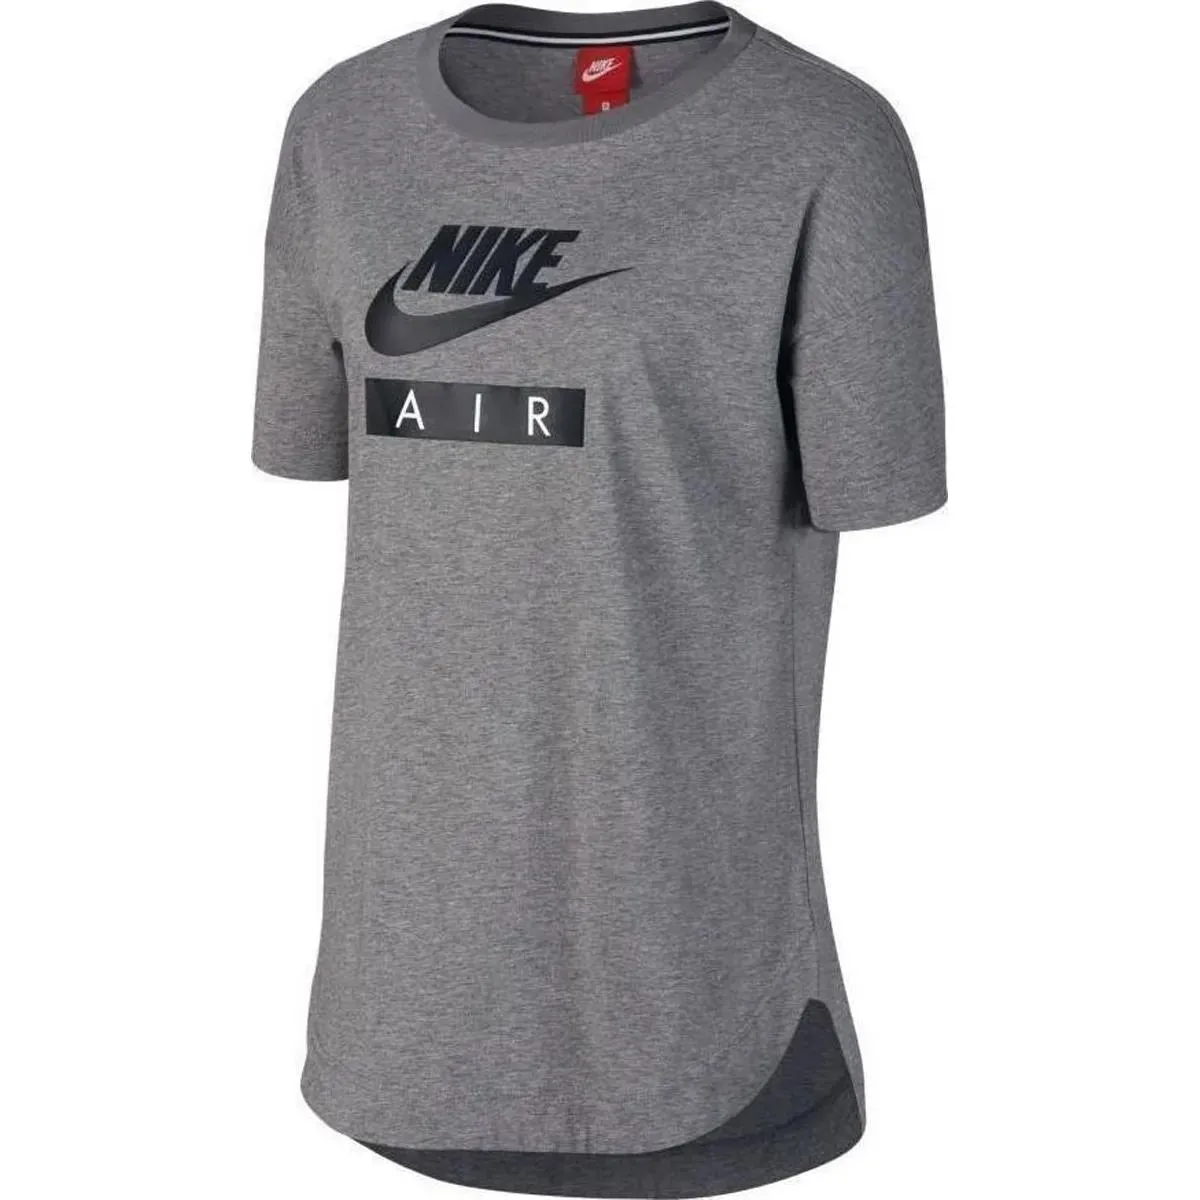 Nike T-shirt W NSW TOP LOGO AIR 